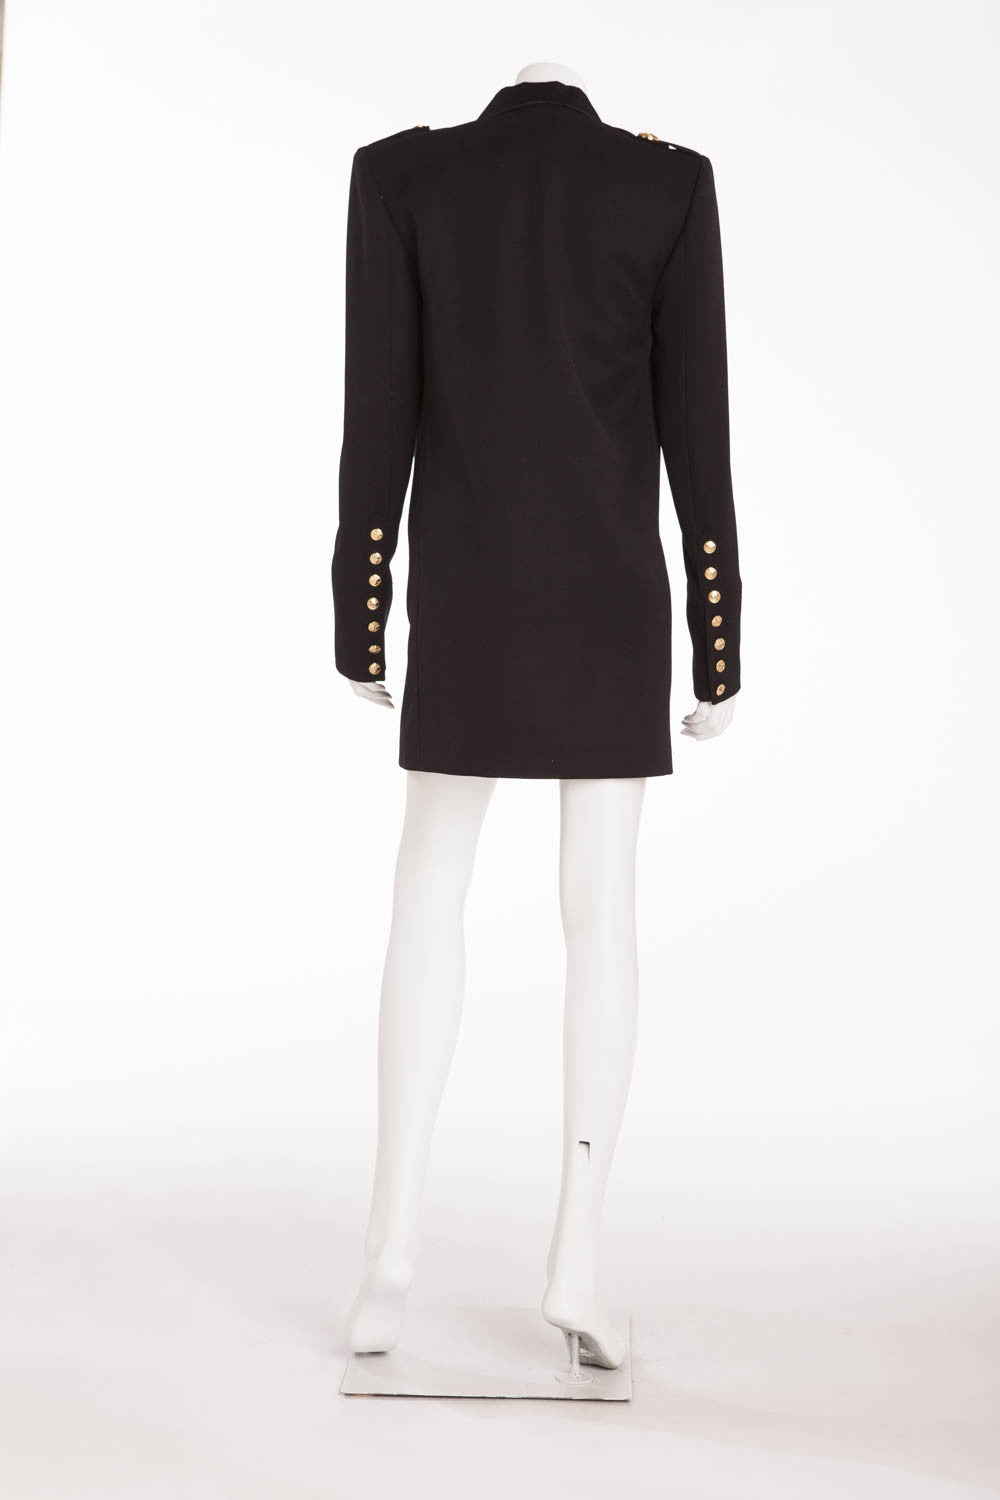 Balmain - As Seen on Kim Kardashian - Black Blazer Dress with Silk Tri LUXHAVE